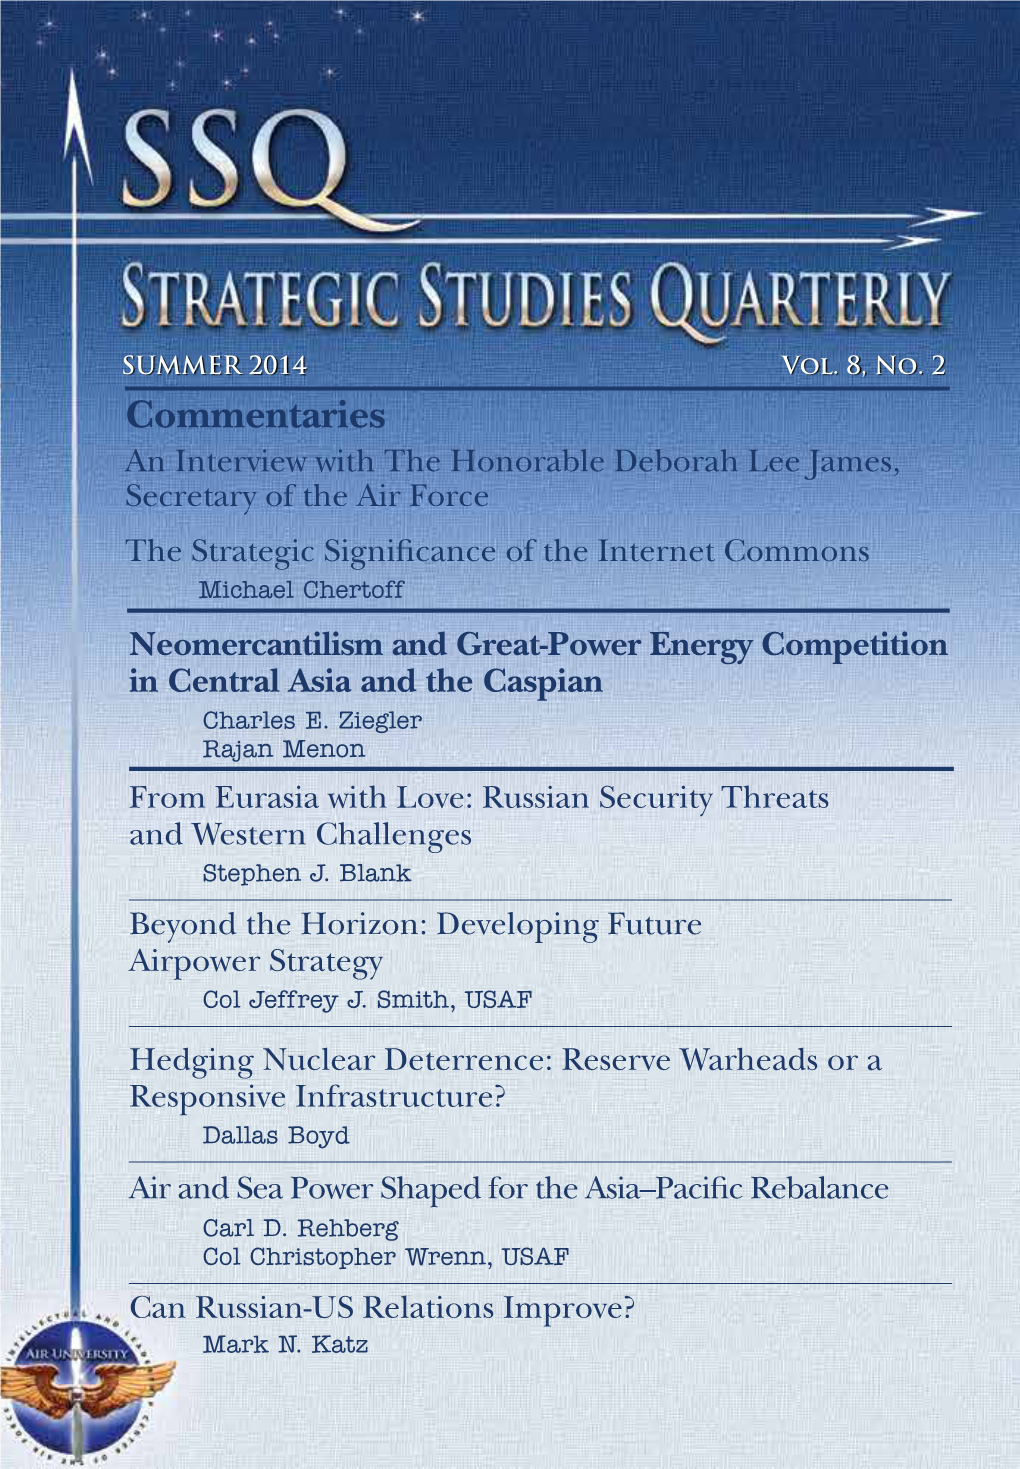 Strategic Studies Quarterly Vol 8, No 2, Summer 2014